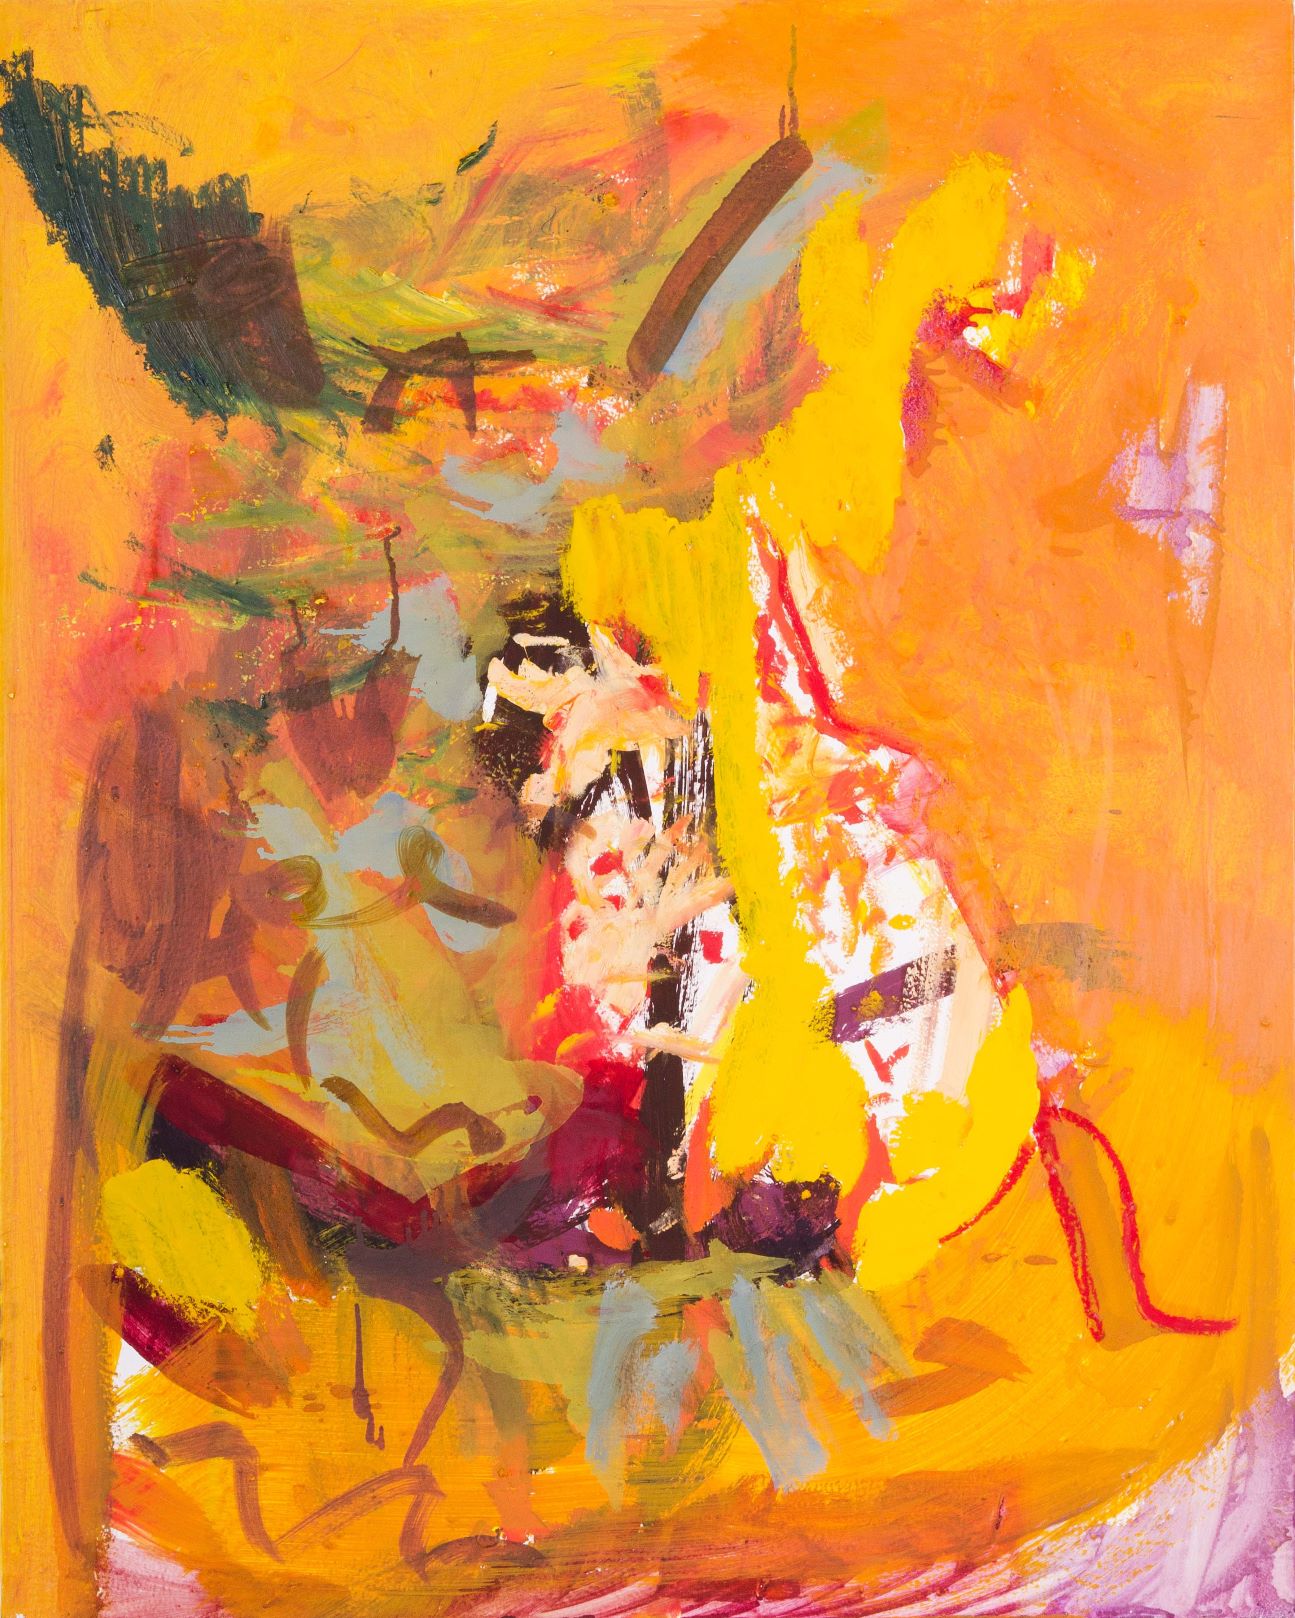 49.paulo lobo. Amarelo 2019 óleo sobre tela 100,5 x 80,5 cm